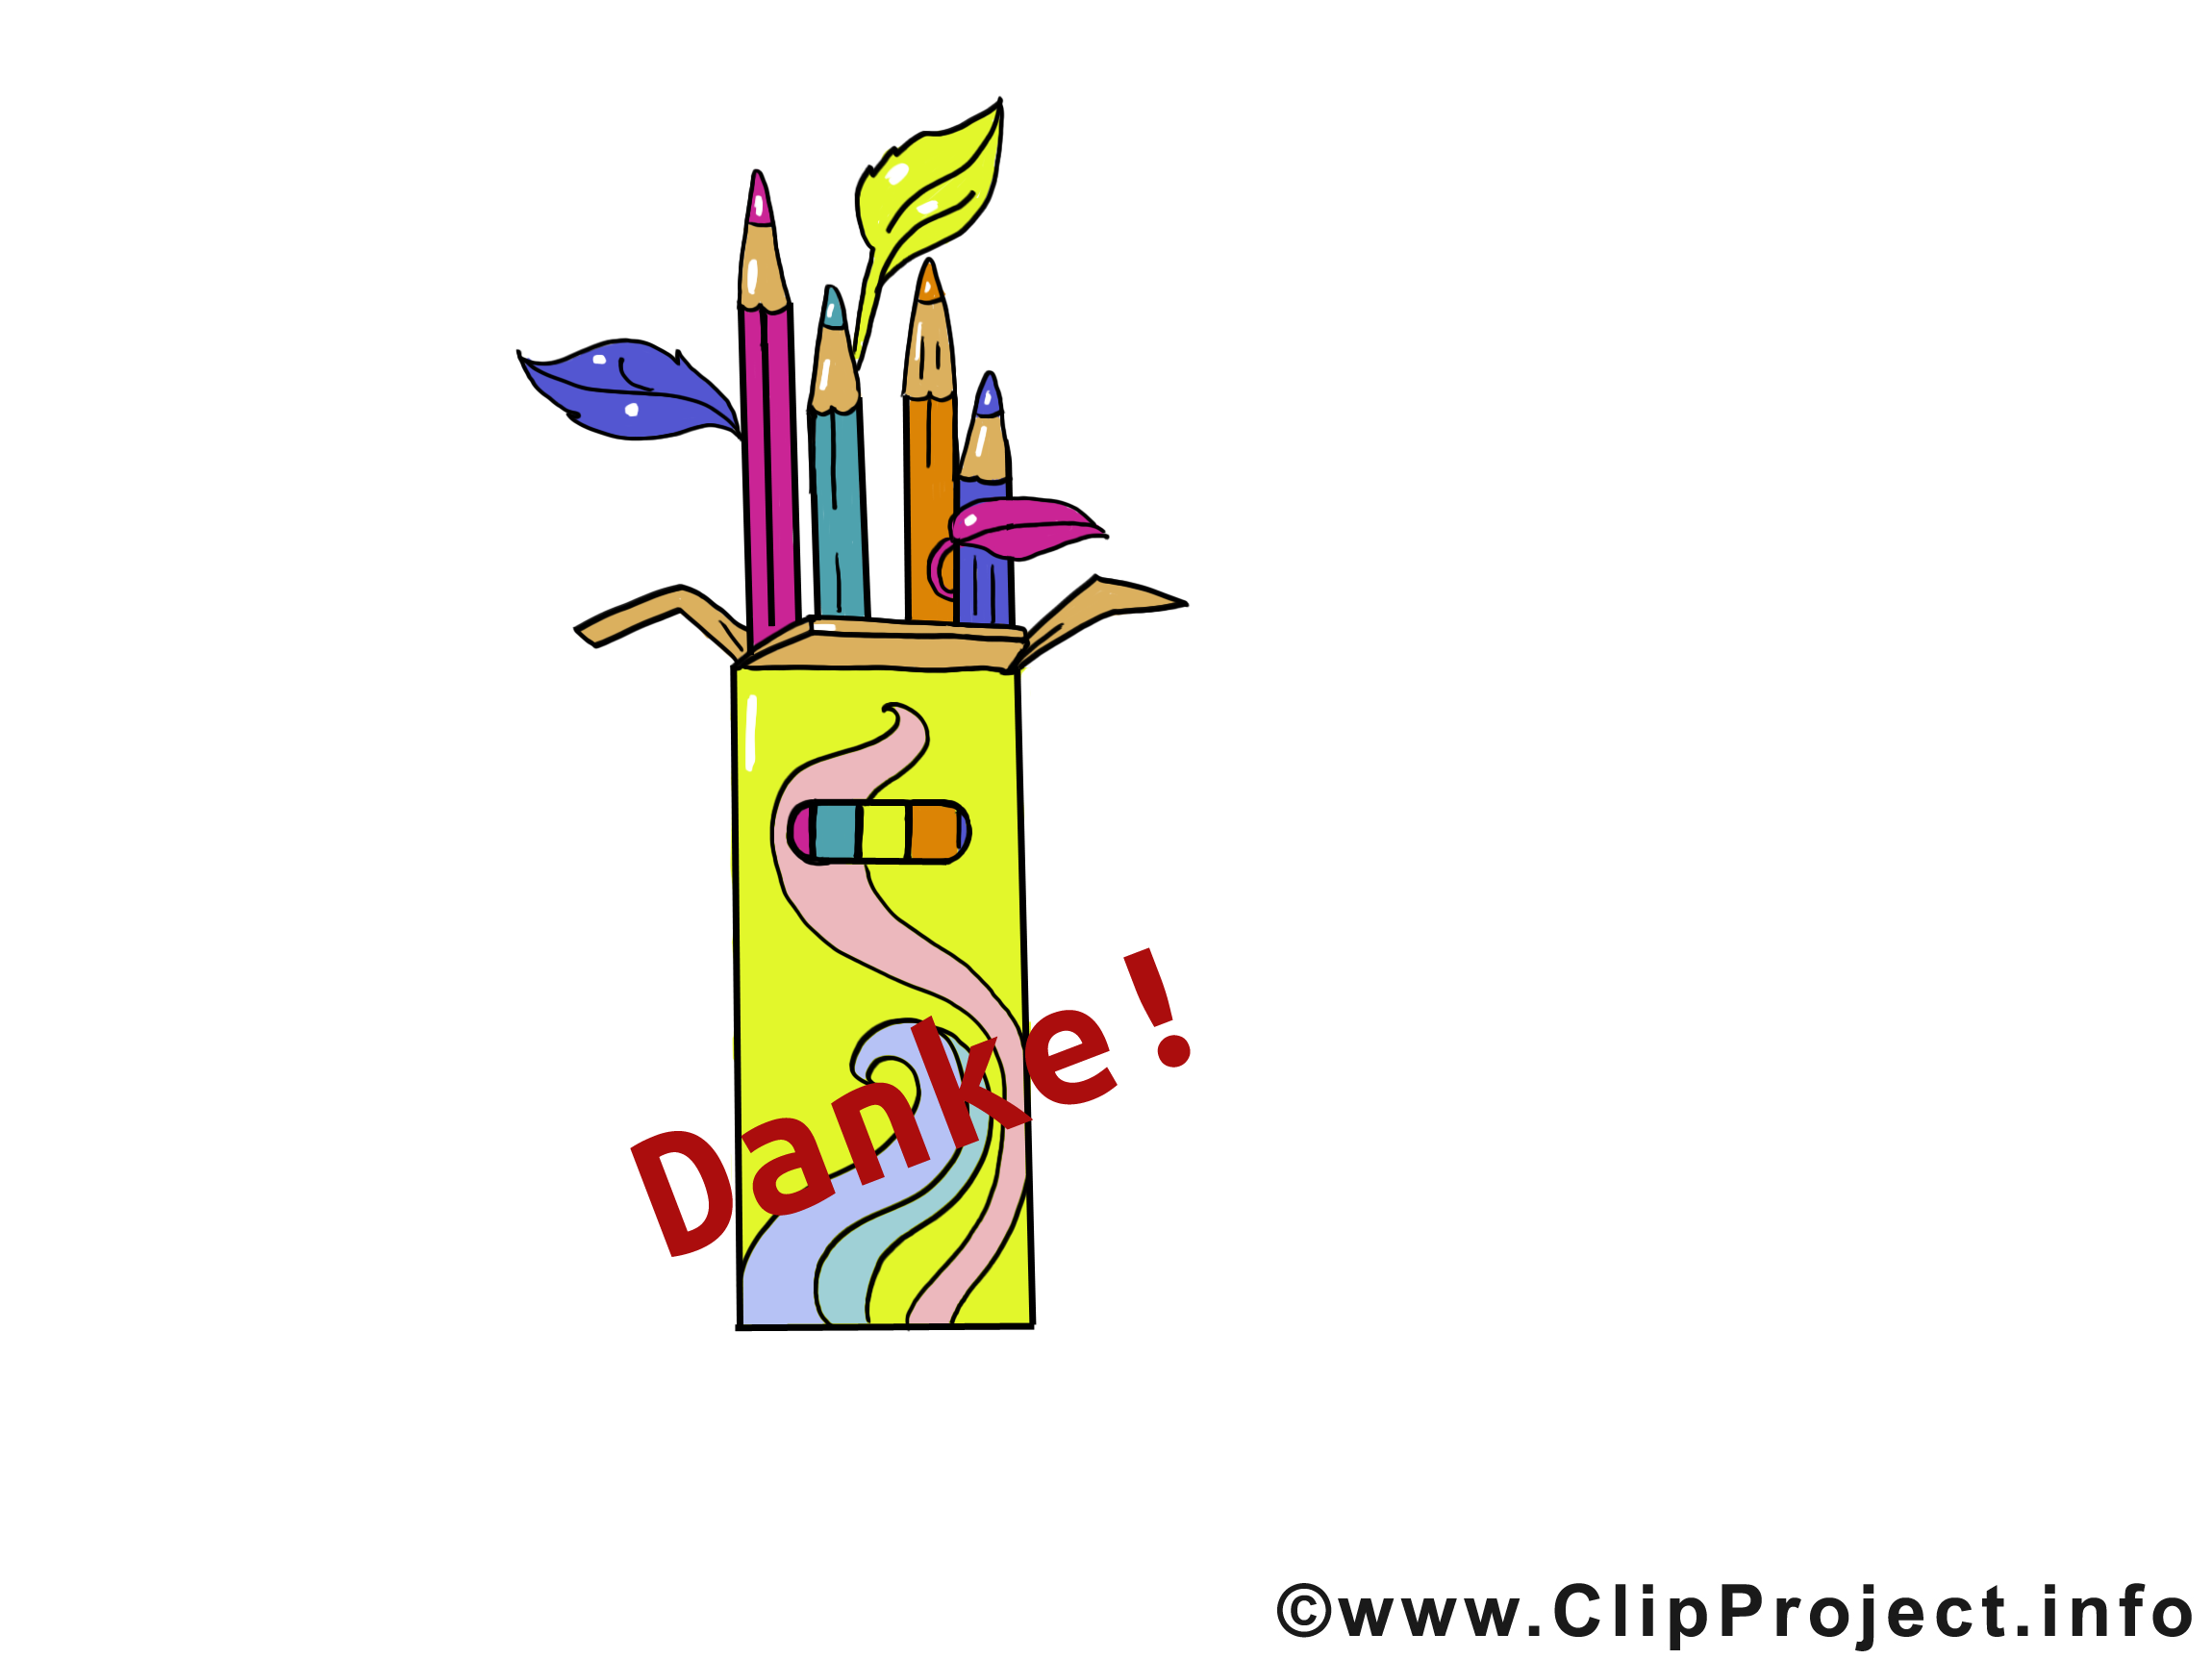 Merci crayons image gratuite – Bureau illustration